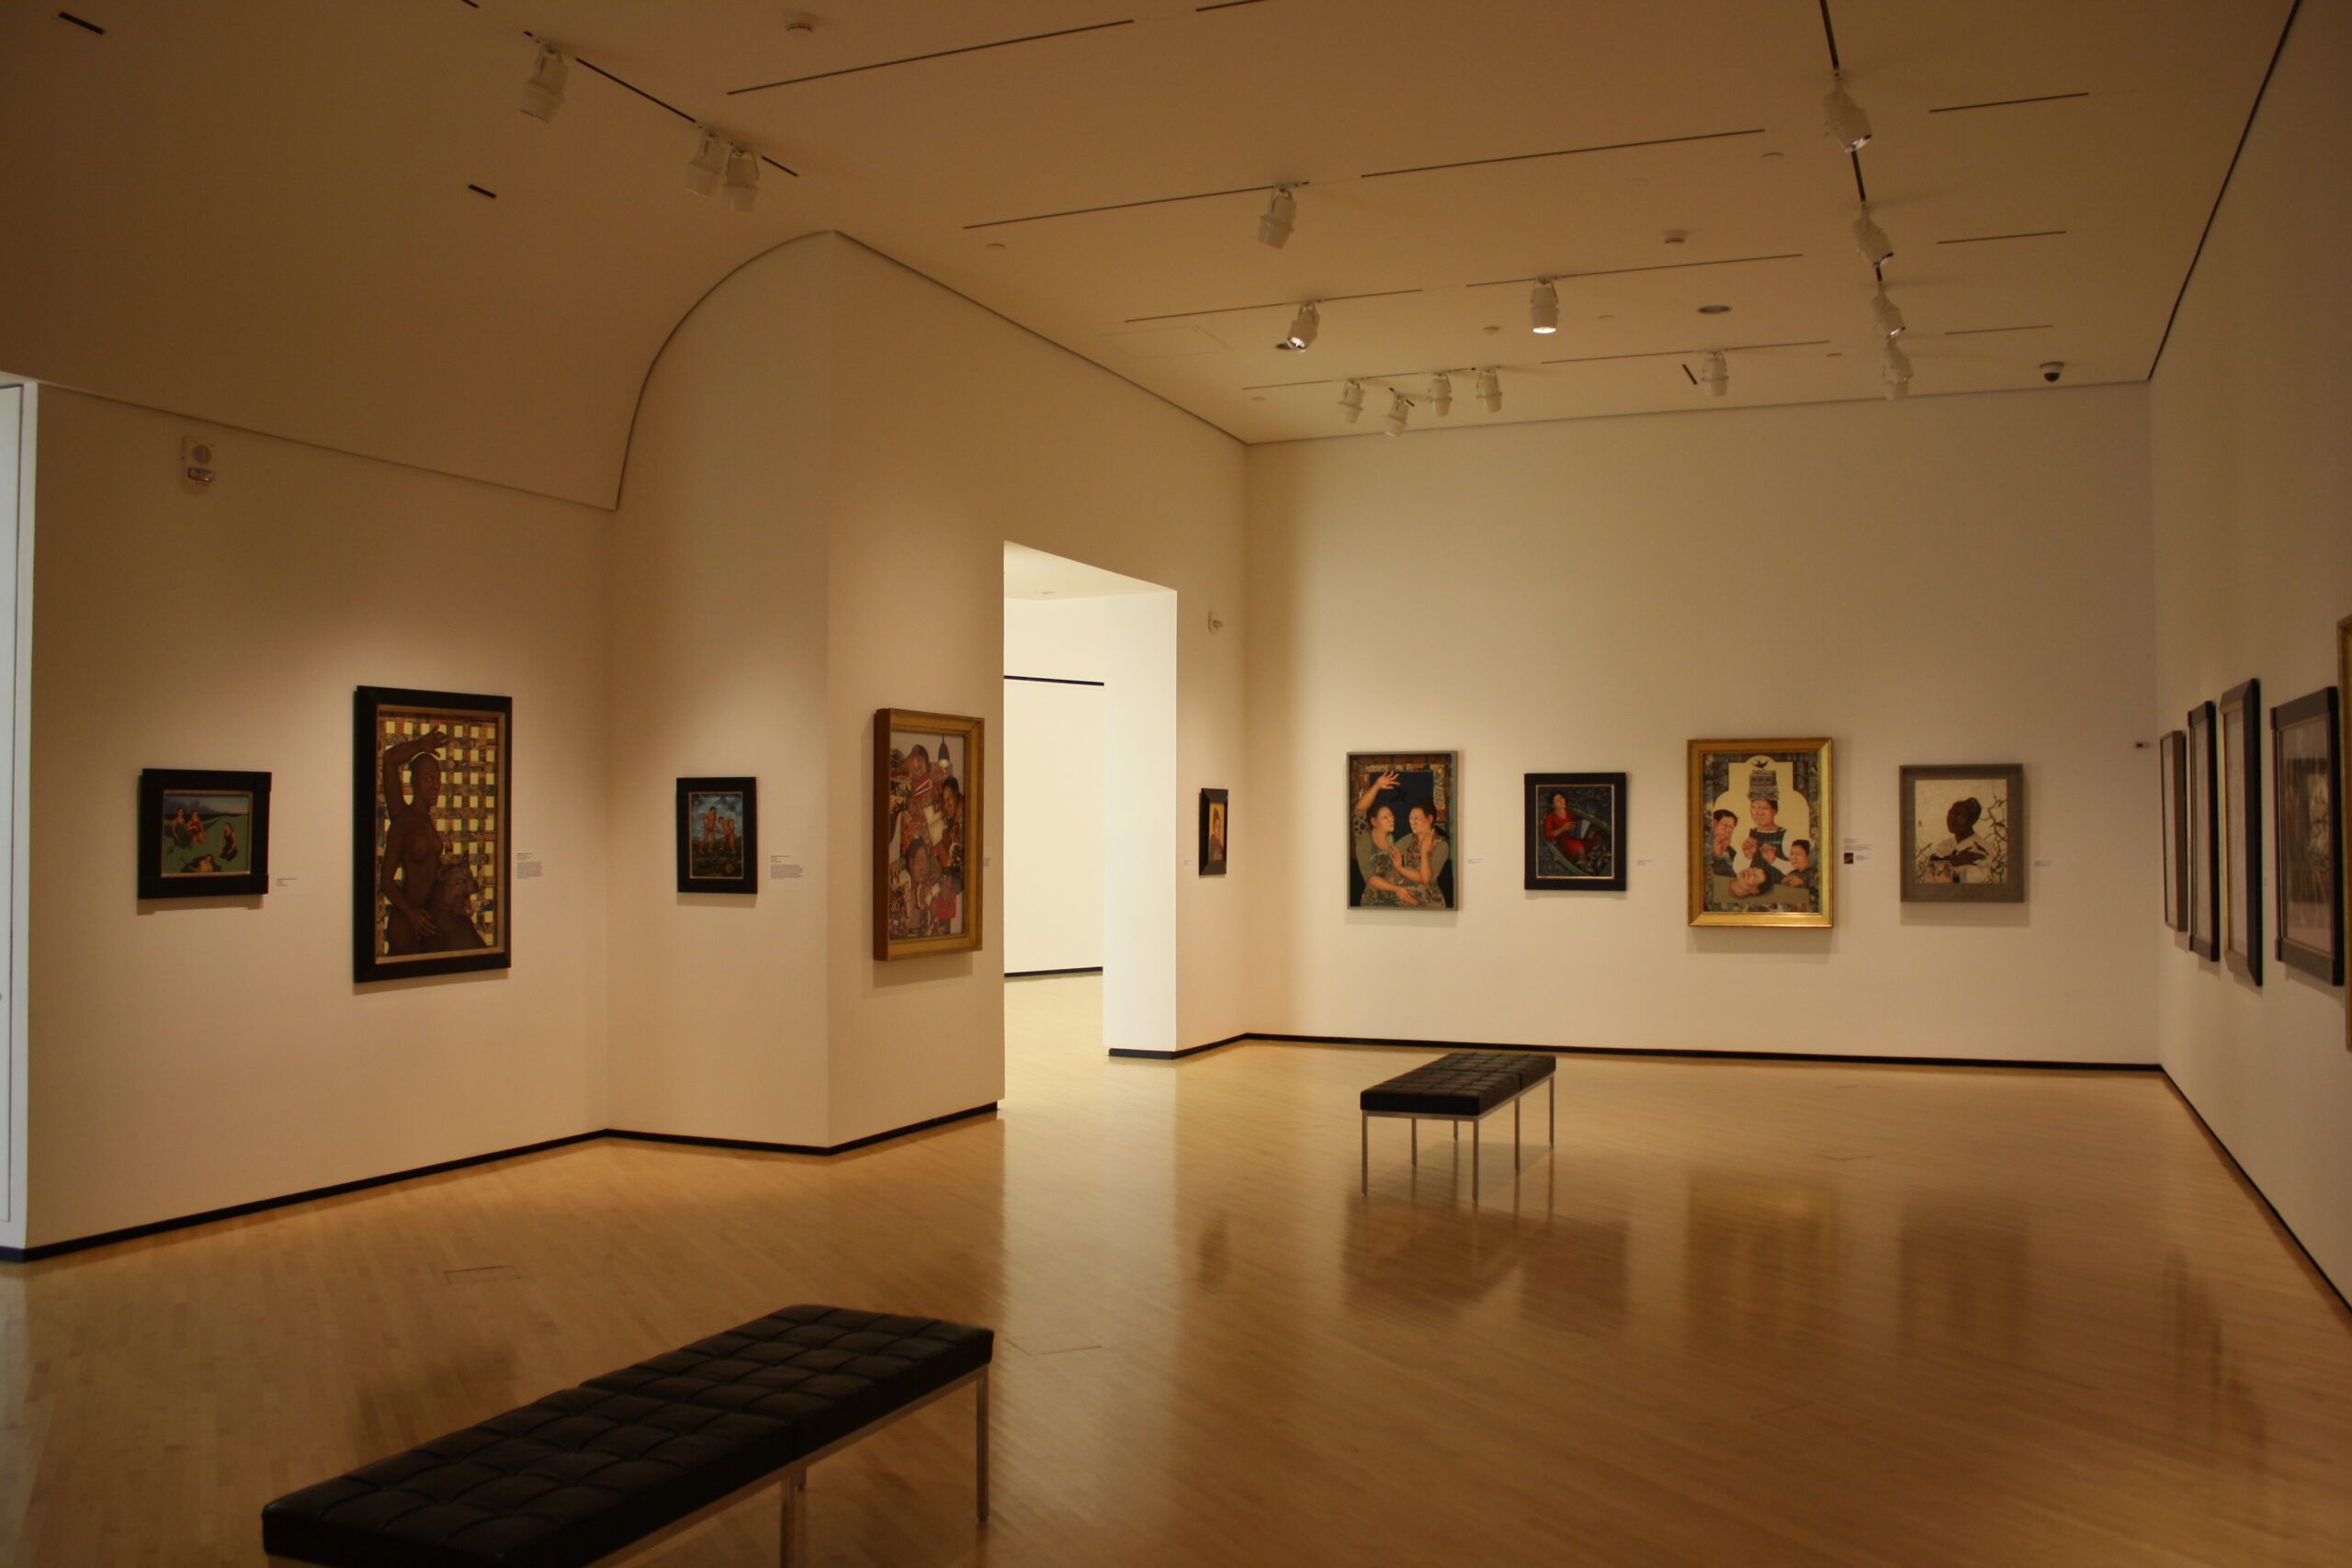 Room with Julie Speed paintings